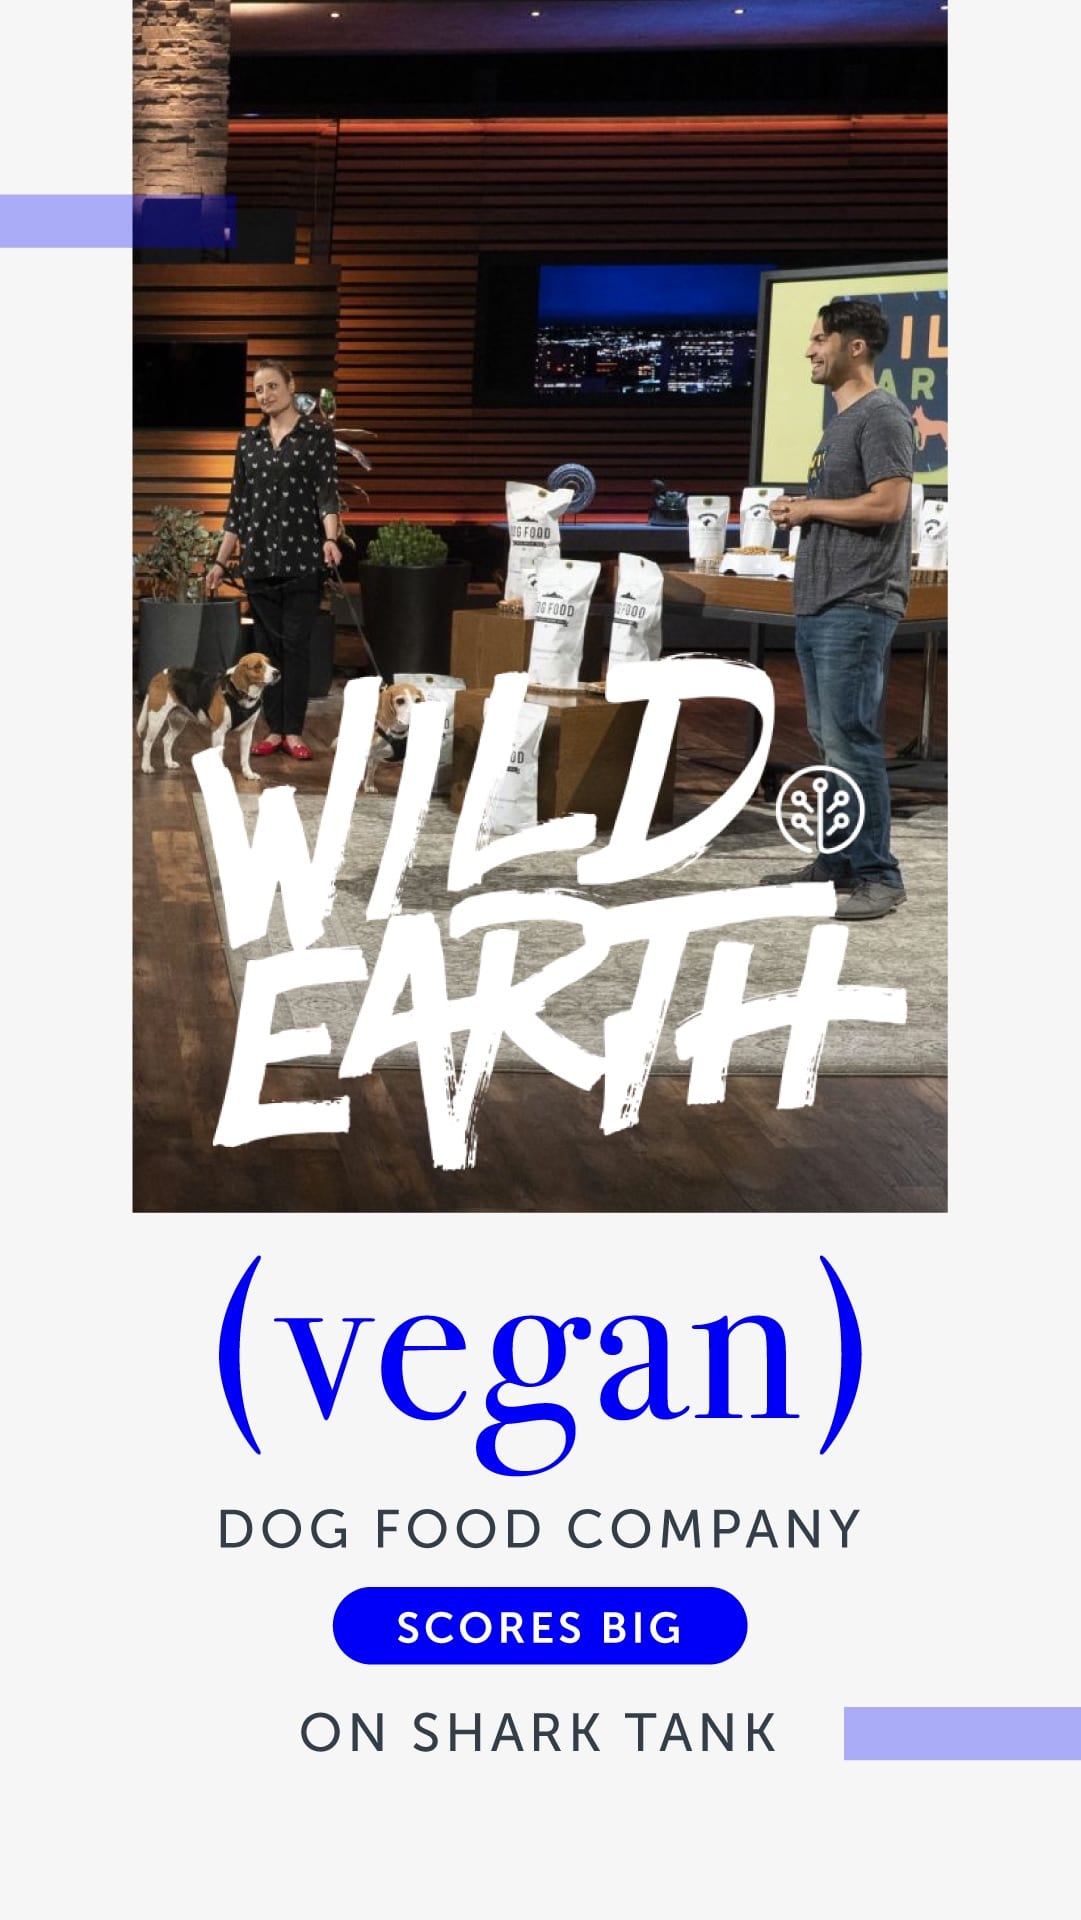 Vegan Dog Food Company Wild Earth Scores Big on Shark Tank